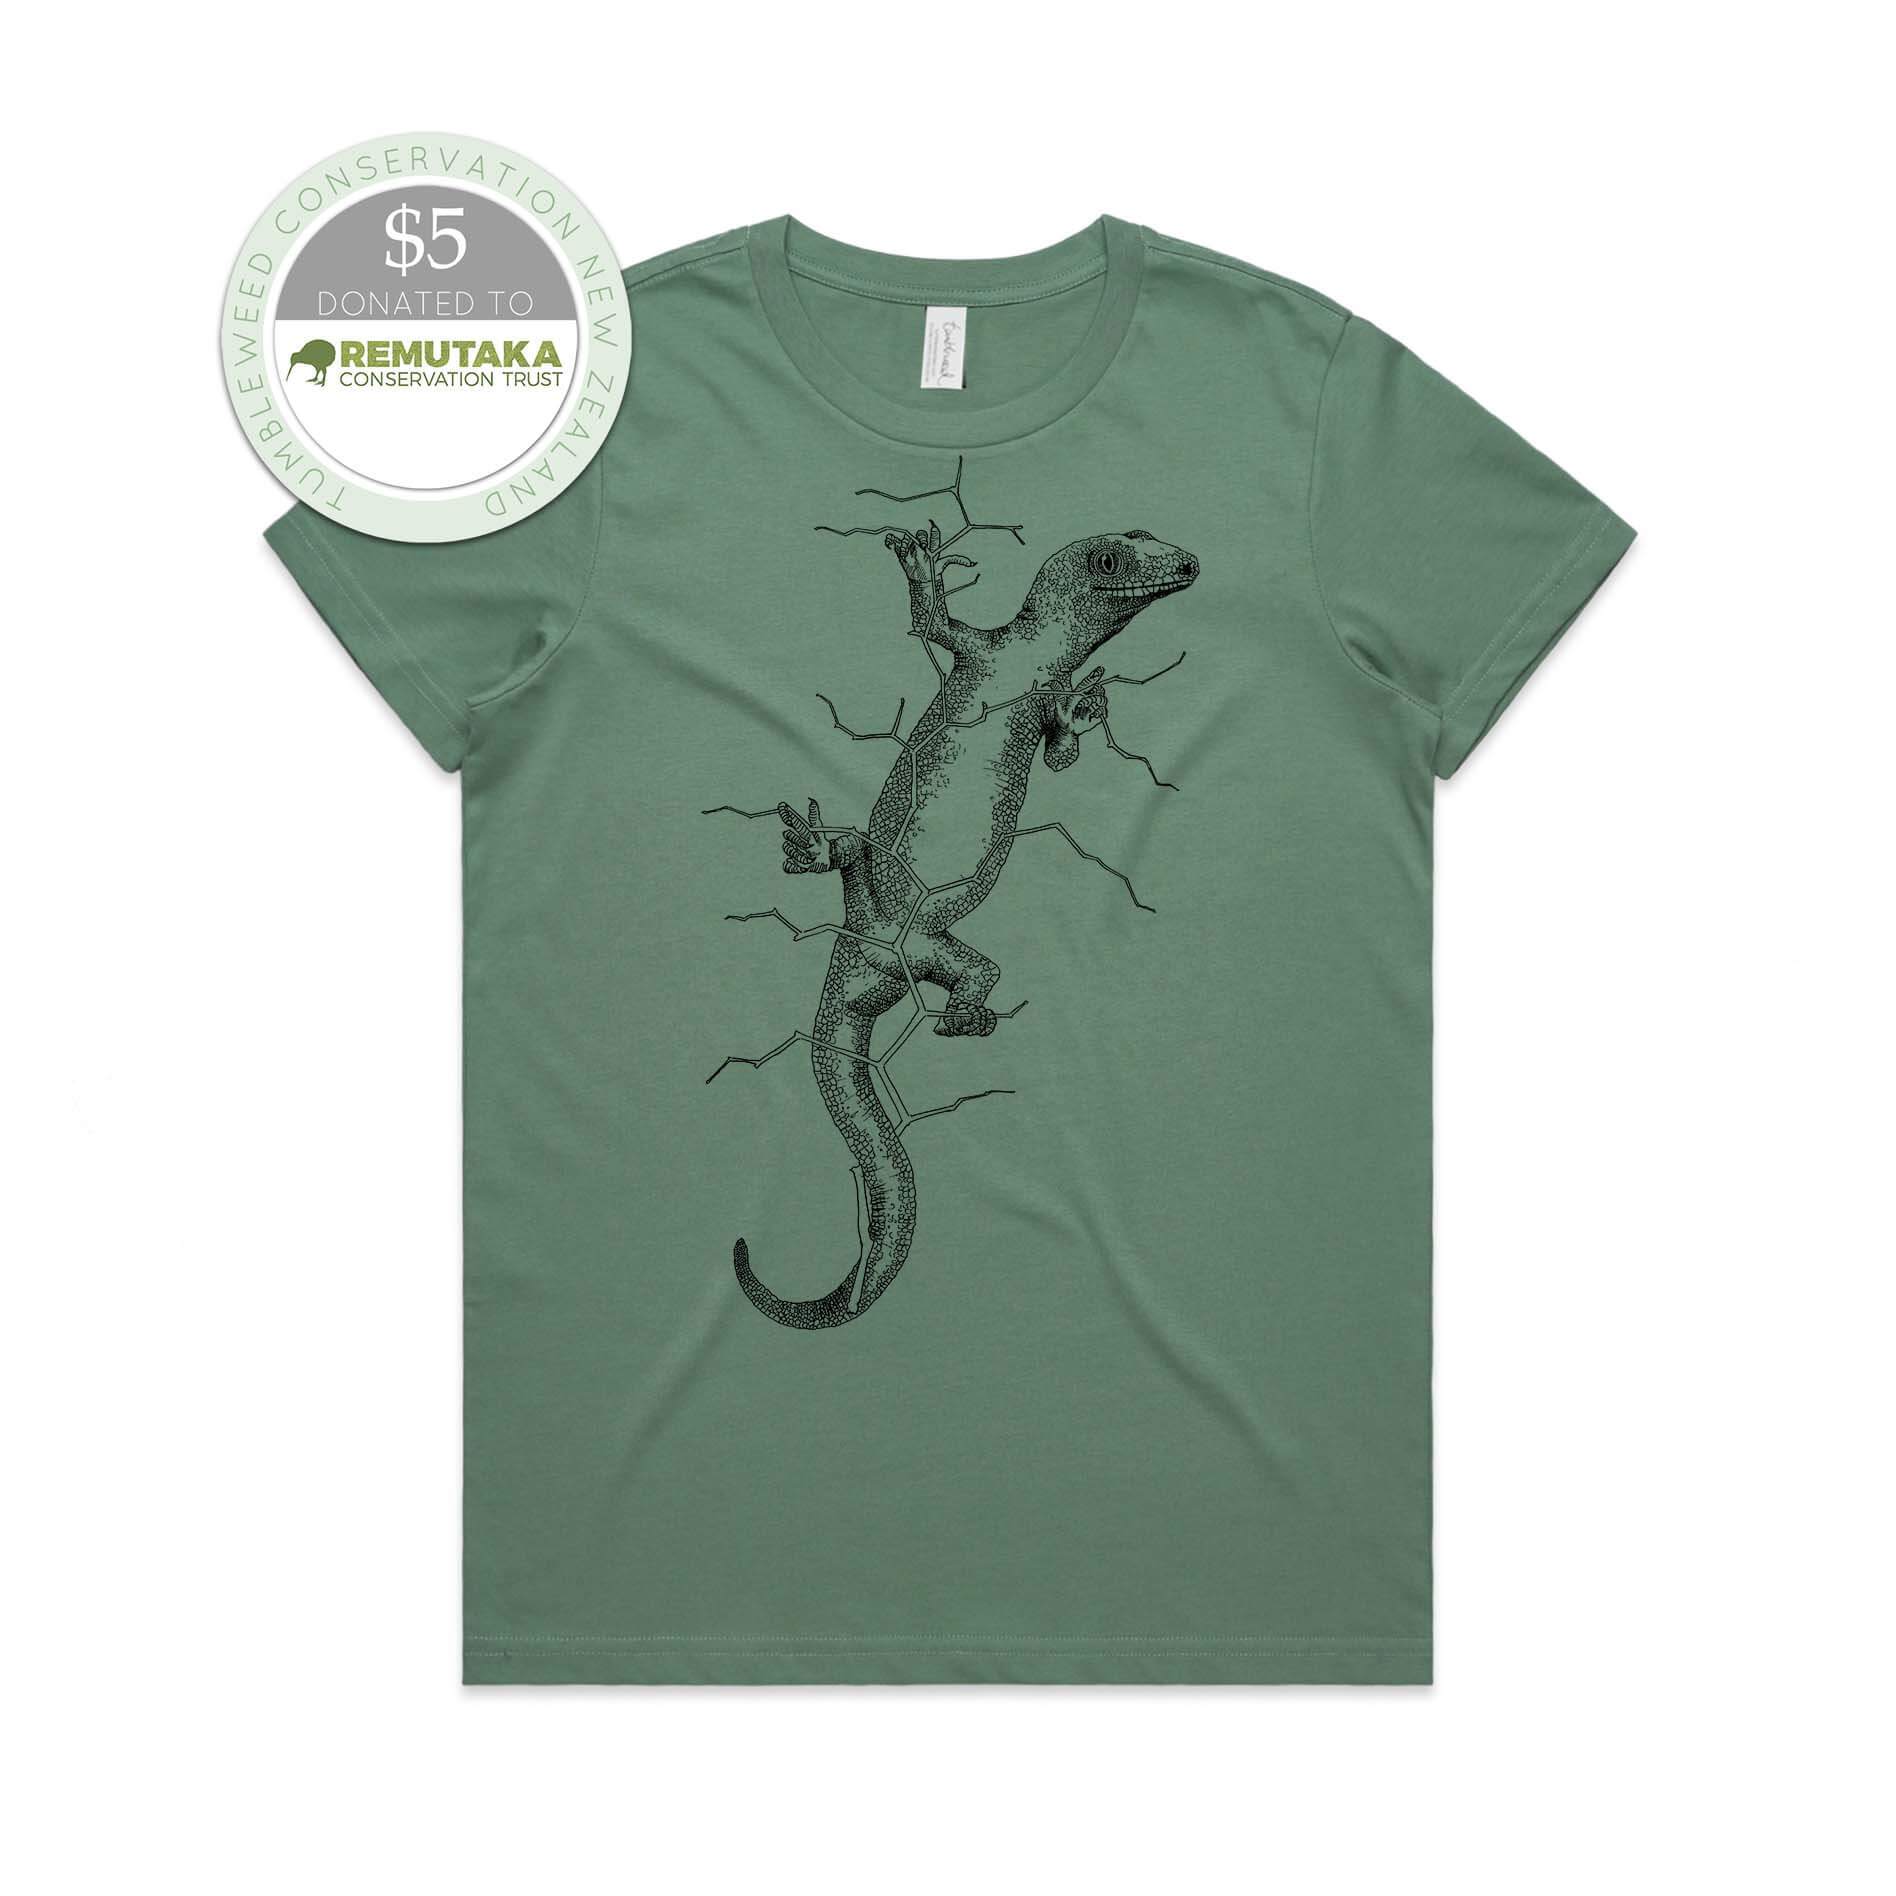 Sage, female t-shirt featuring a screen printed gecko design.